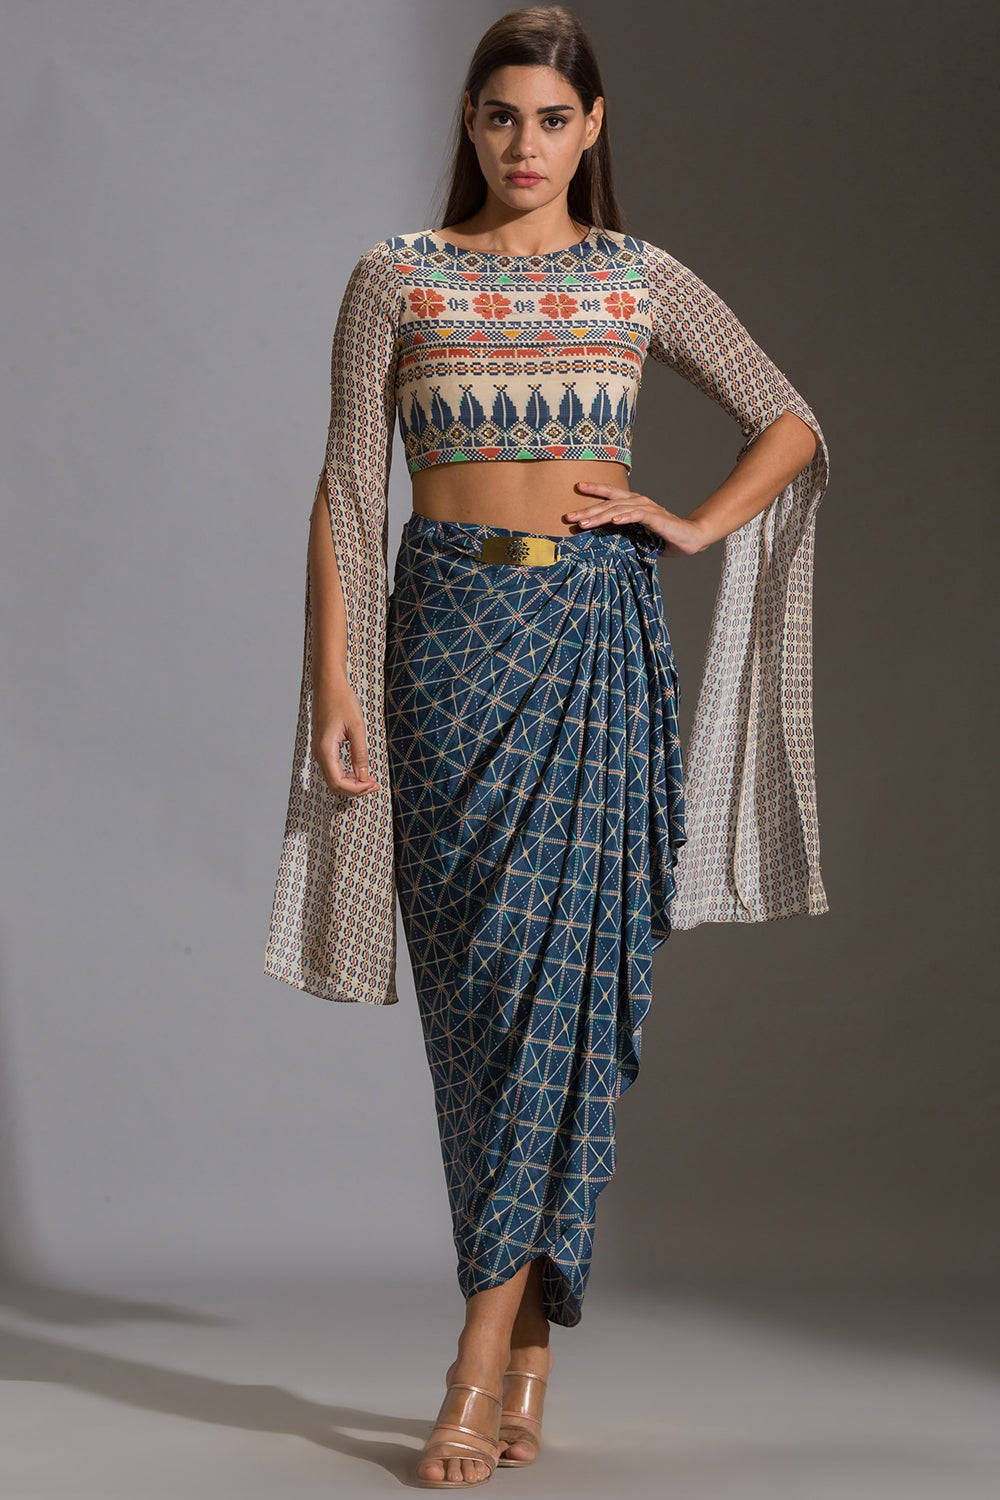 Tiraz Geomtrical Print Angel Sleeves Crop Top And Skirt